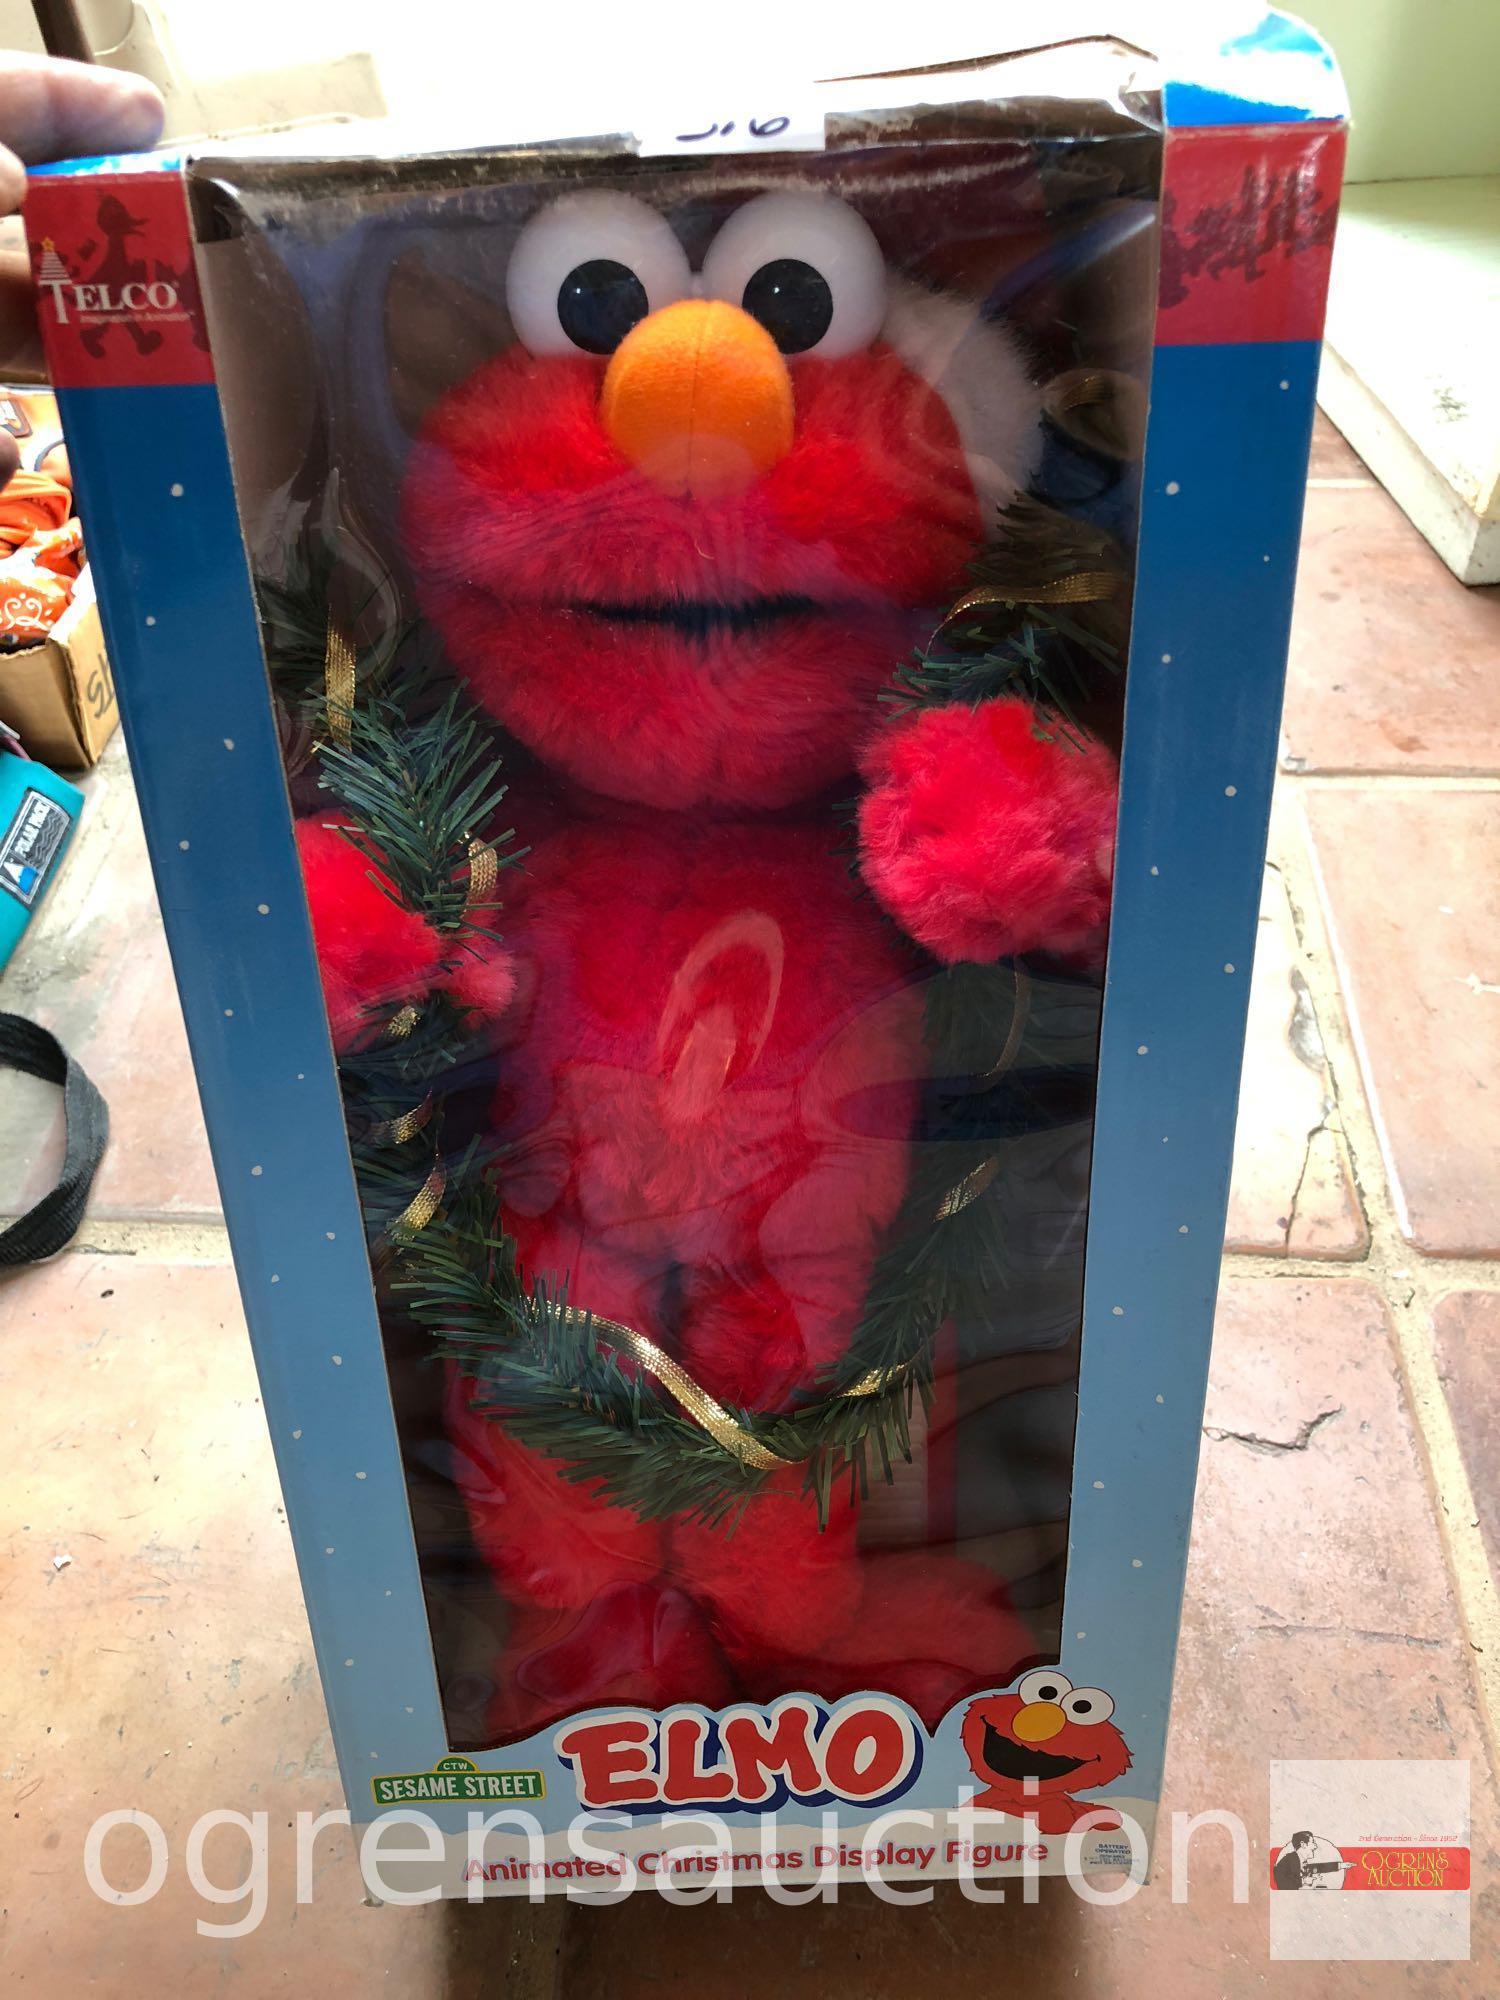 Christmas animated display figure - Sesame Street "Elmo", new in box, 16"h